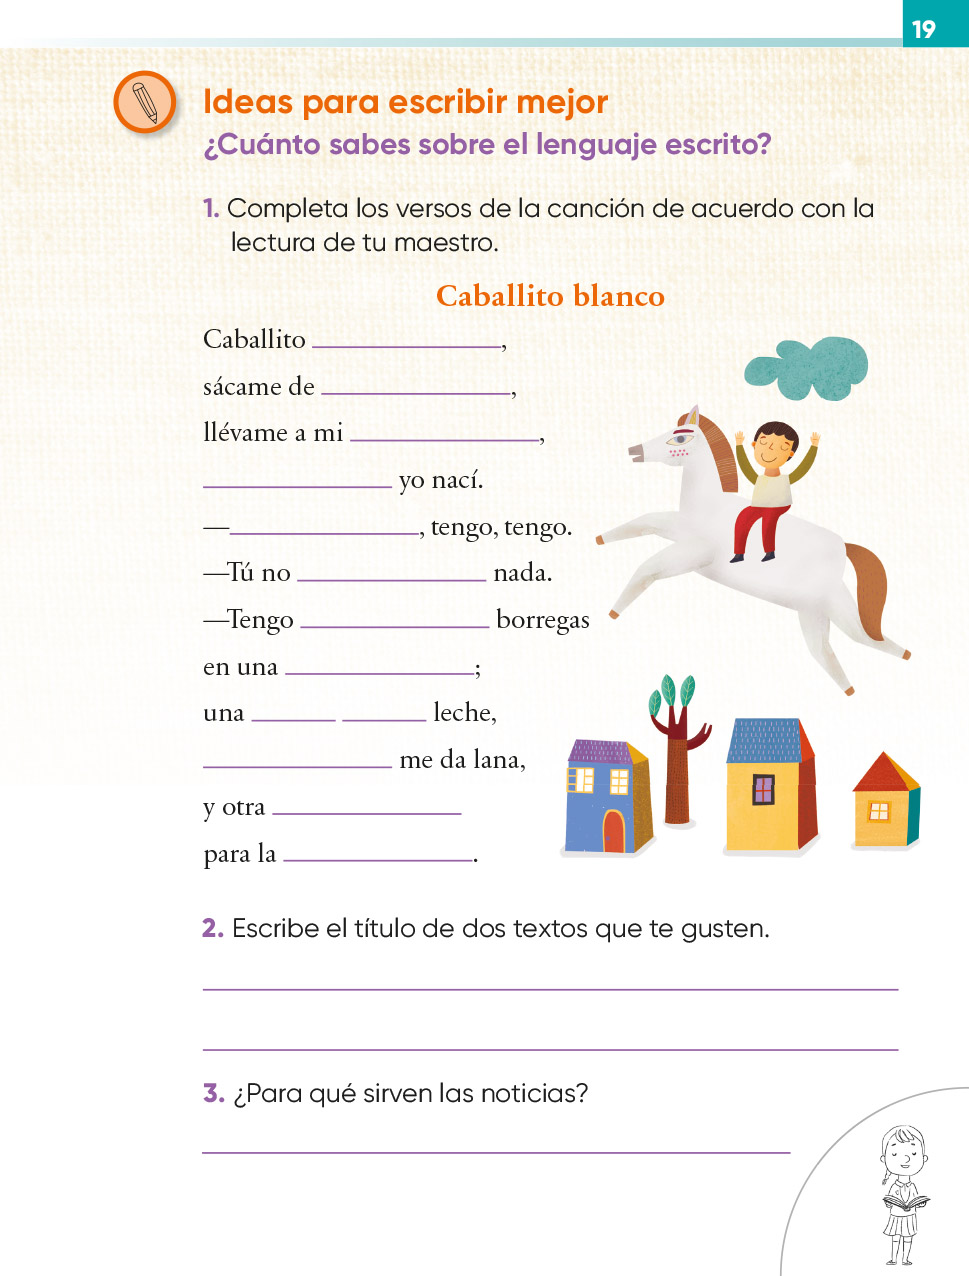 Lengua Materna Español Segundo Grado 2020 2021 Página 19 De 225 Libros De Texto Online 2851